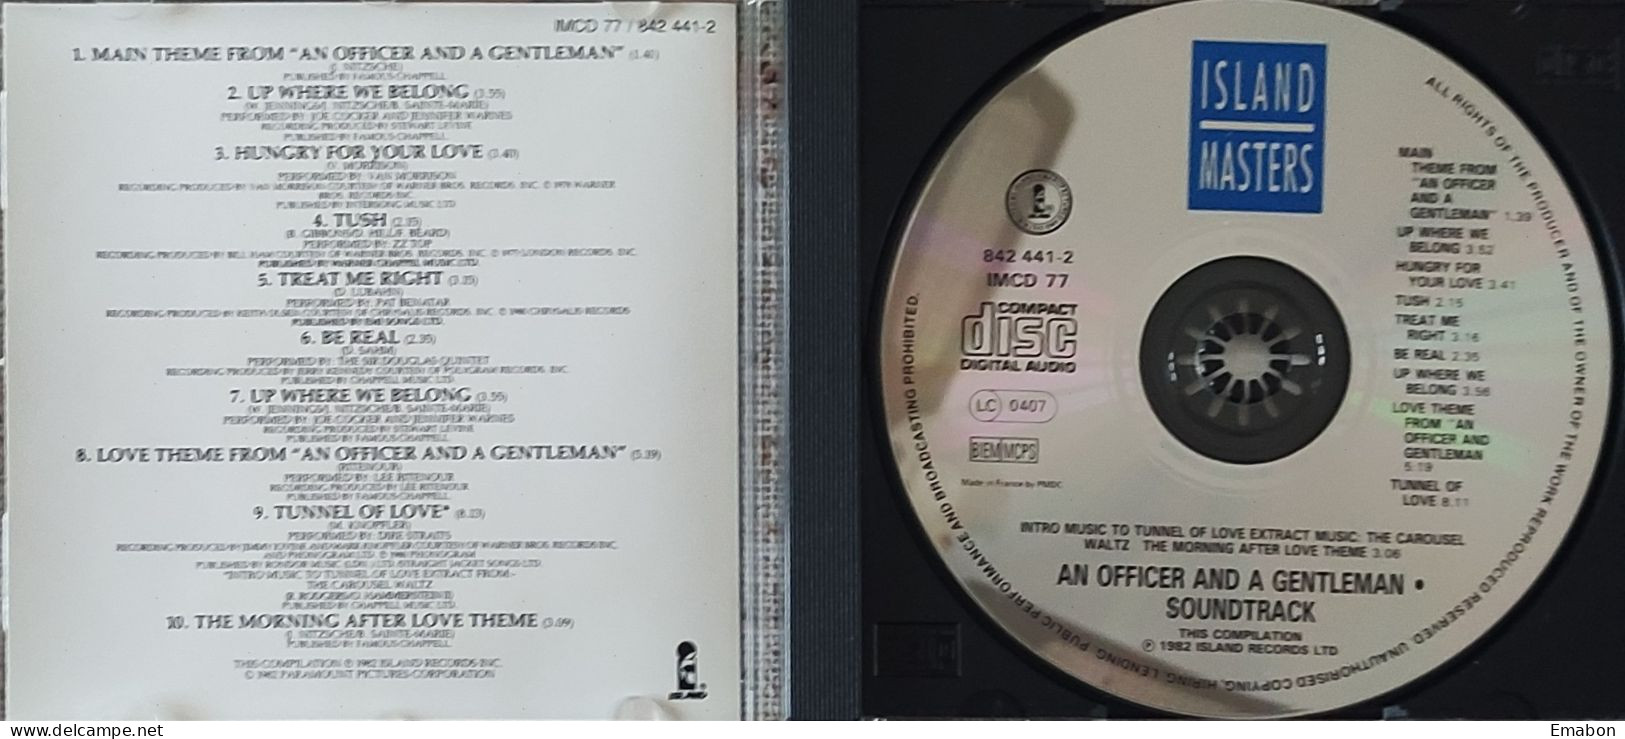 BORGATTA - FILM MUSIC  - Cd  RIDLEY SCOTT - AN OFFICER AND A GENTLEMAN - ISLAND MASTERS 1995 - USATO In Buono Stato - Filmmusik